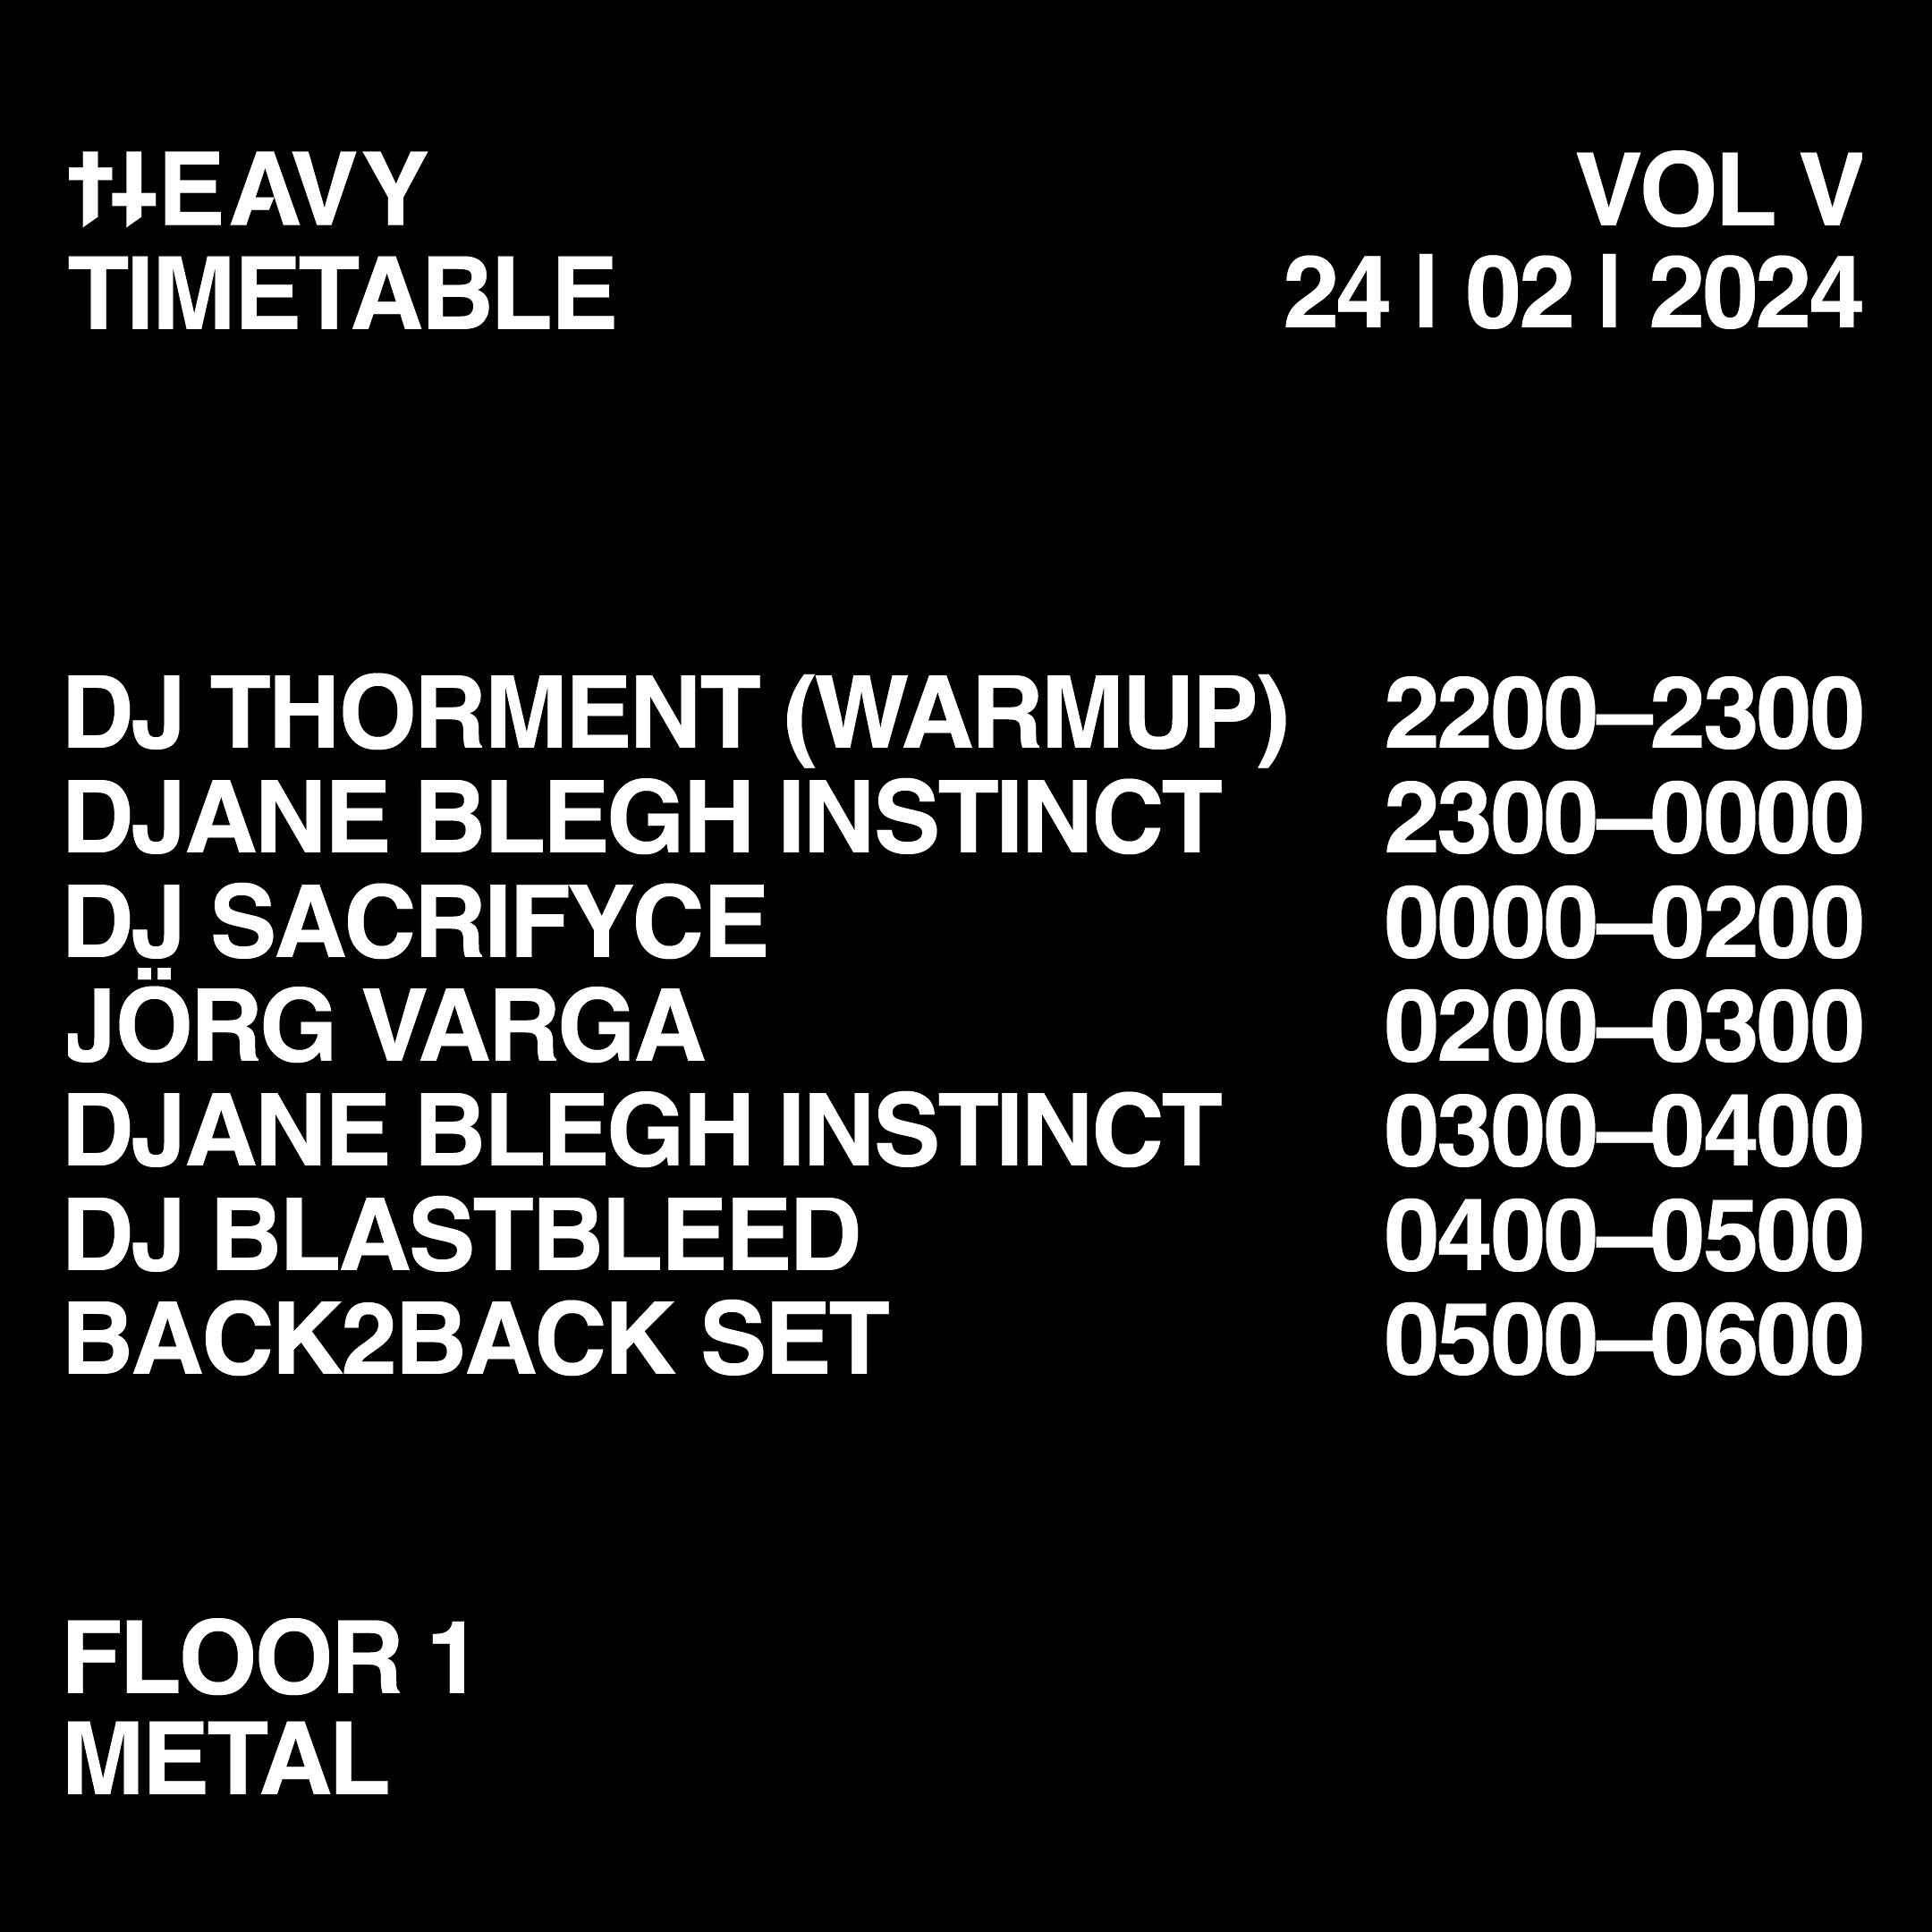 ++ METAL FLOOR ++ @heavy_club VOL V | 24.02.2024 | PRATERSAUNA | Prepare for some heavy s#it! 🤘⚡️✝️
++ DJ THORMENT
++ DJANE BLEGH INSTINCT (aka @die_strawanzerin_ )
++ DJ SACRIFYCE (HEAVY RESIDENT)
++ J&Ouml;RG VARGA (@thejvrg)
++ DJ BLASTBLEED (HEA